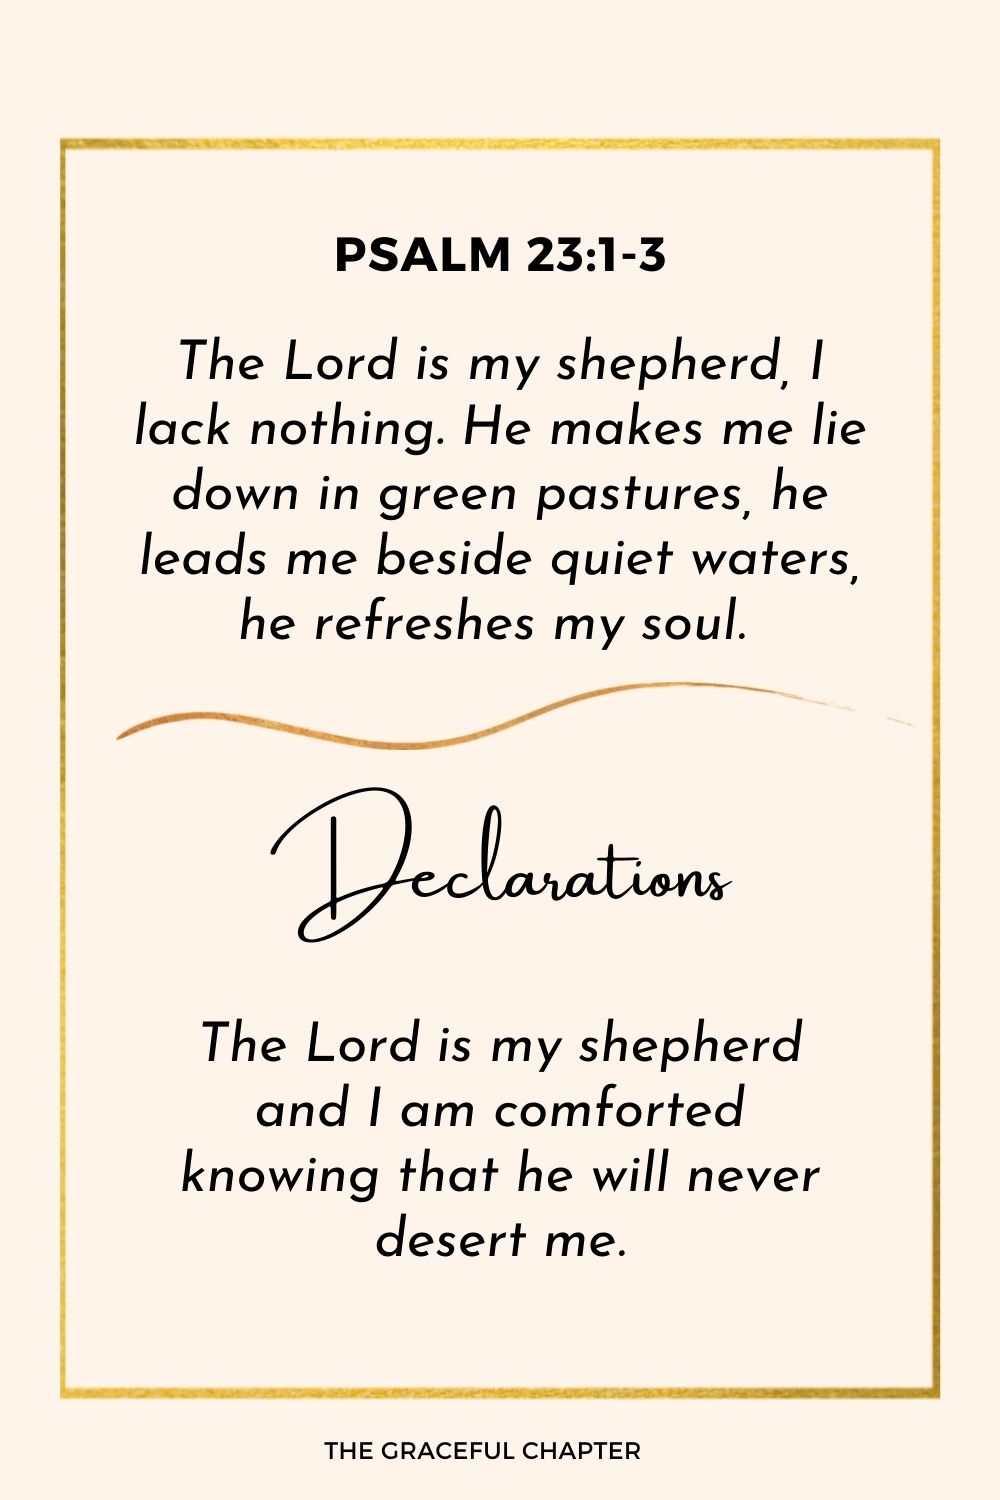 Declaration - Psalm 23:1-3